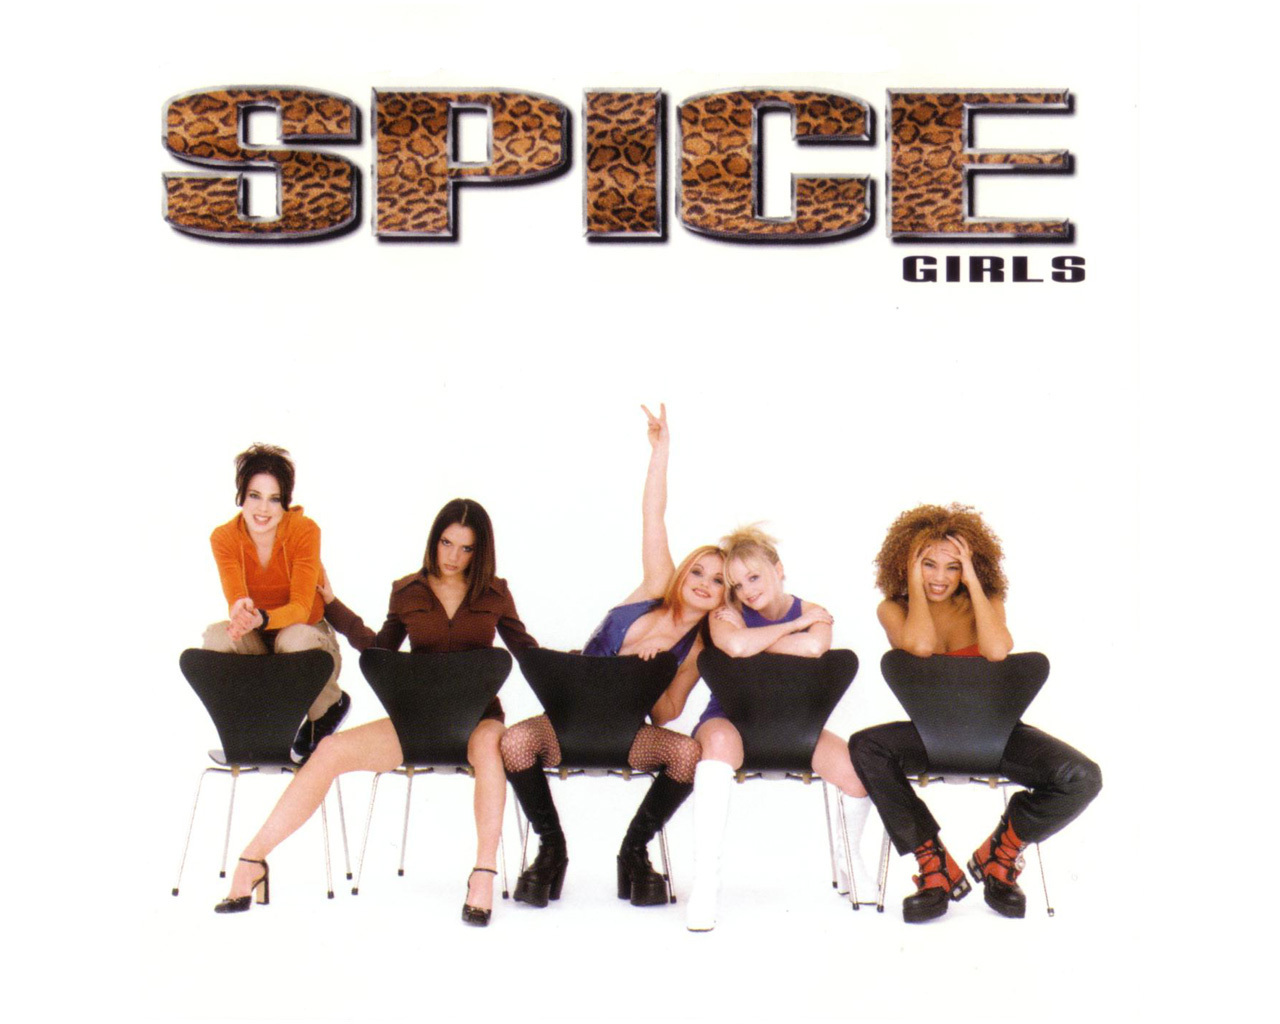 http://1.bp.blogspot.com/-LrquBlvFC7s/TyRYpR3x1dI/AAAAAAAABIg/GNpWjaVMbqs/s1600/Spice-Girls-spice-girls-1064263_1280_1024.jpg